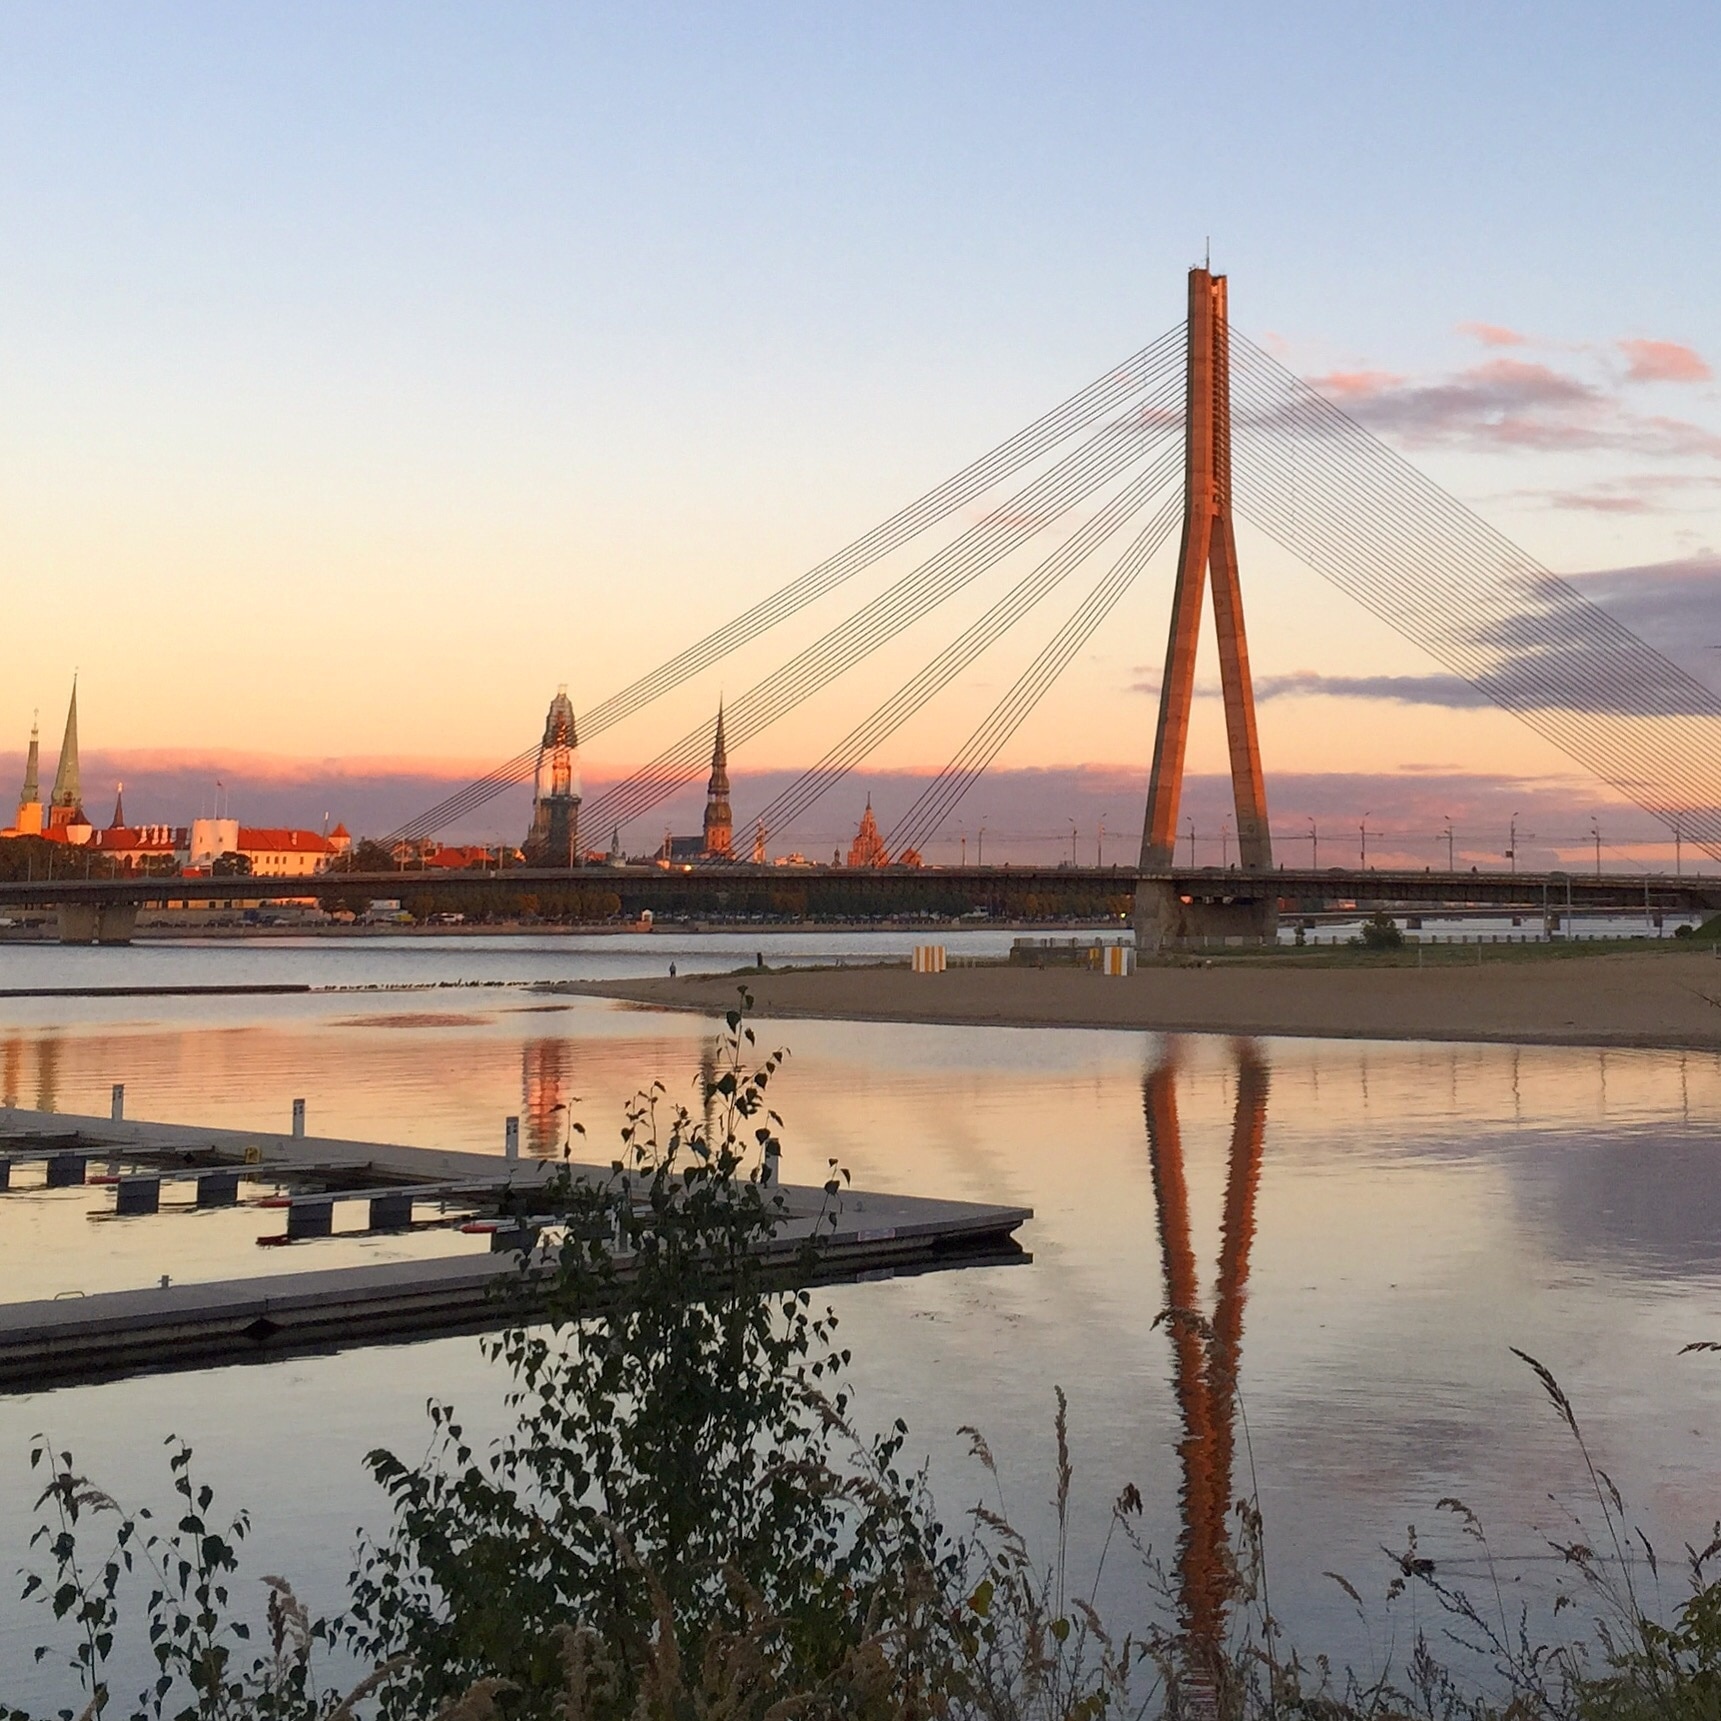 On of my favorite views in the world, the Vanšu Bridge over the Daugava river in #Riga, #Latvia. #Baltic 